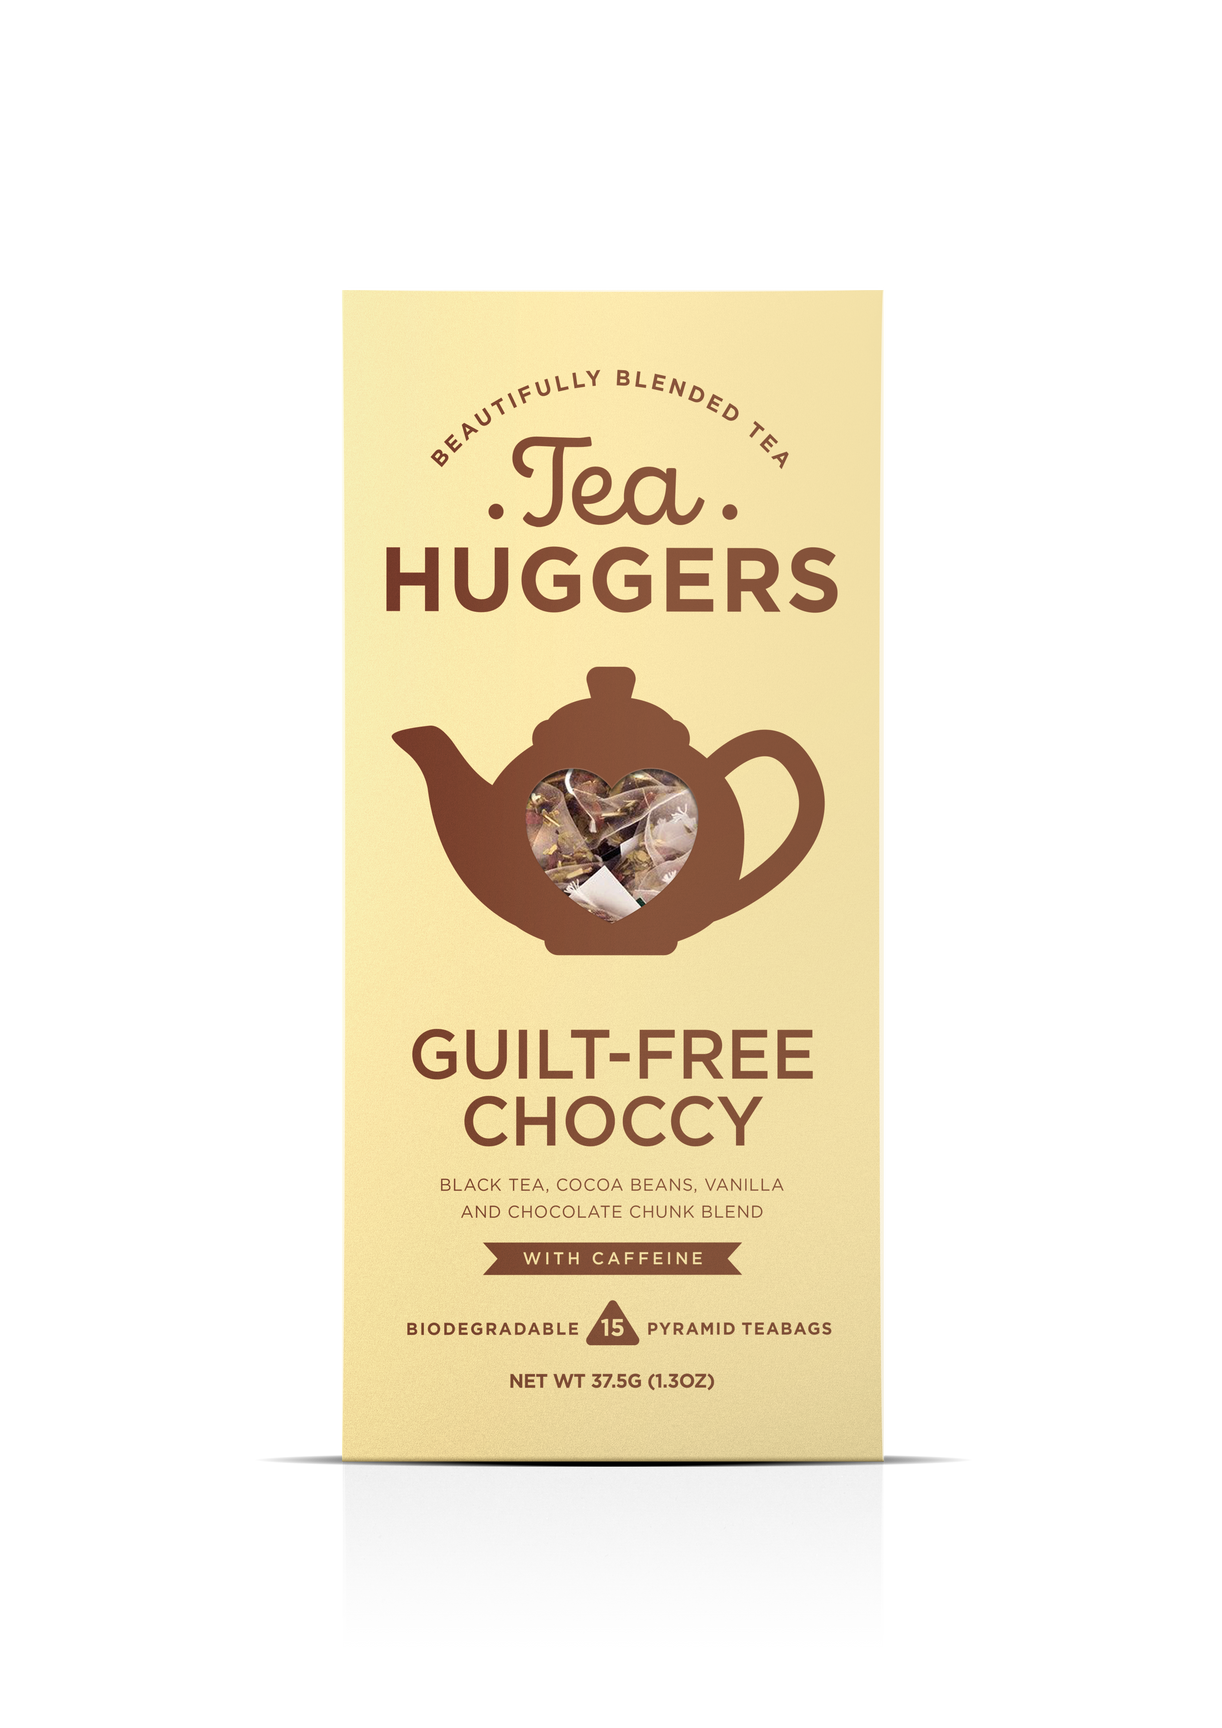 Tea Huggers Guilt-Free Choccy Tea Bags